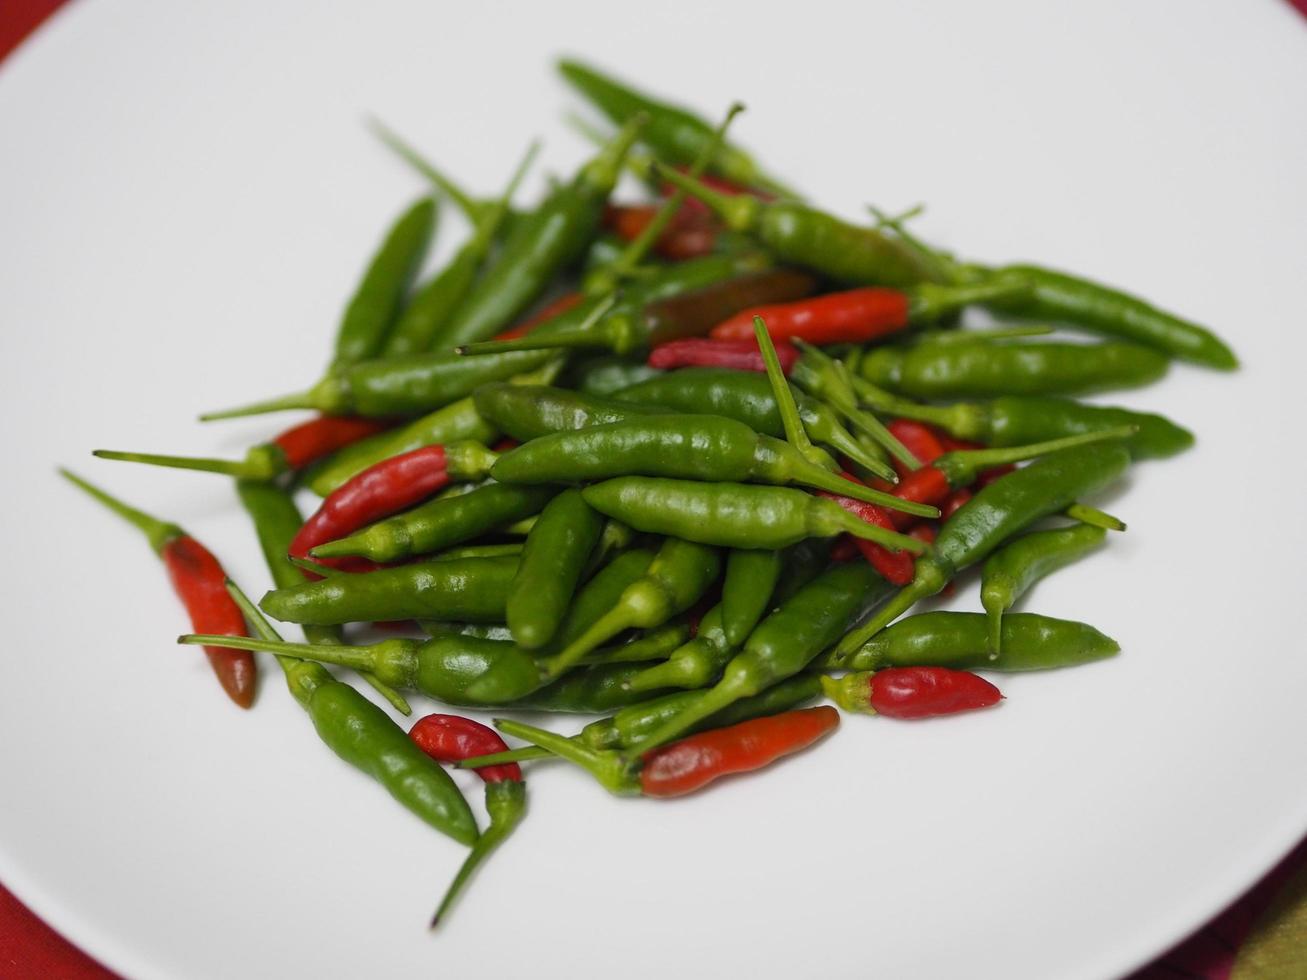 groene rode thaise peper, chili padi, capsicum annuum versheid op wit bord plantaardig voedsel foto